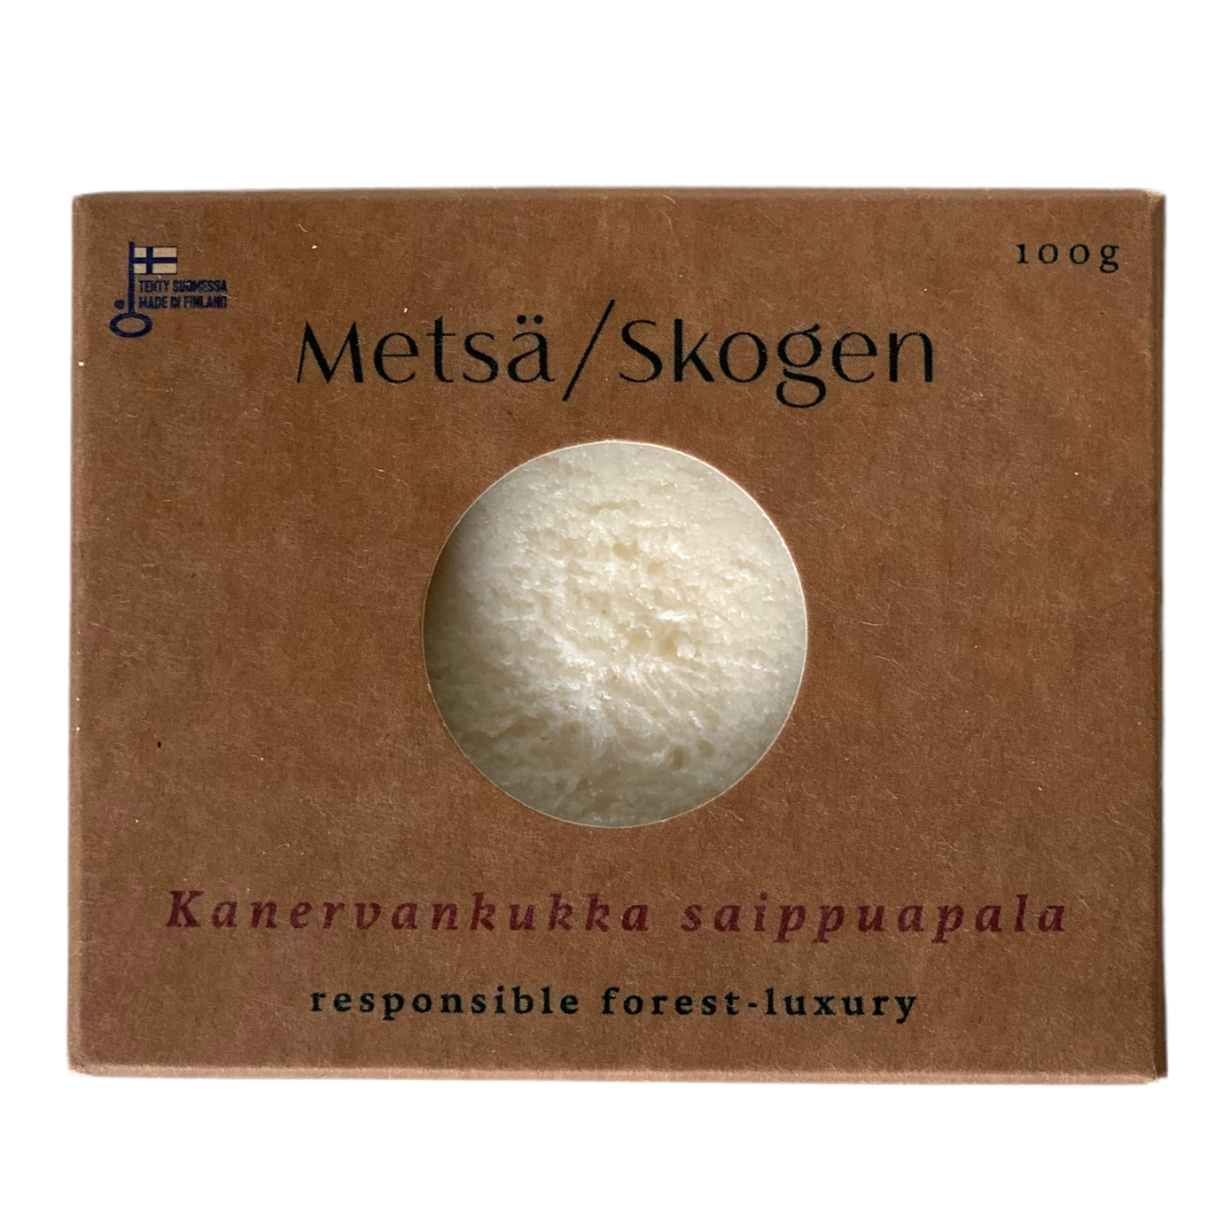 Metsä/Skogen Calluna Flower Salt Soap